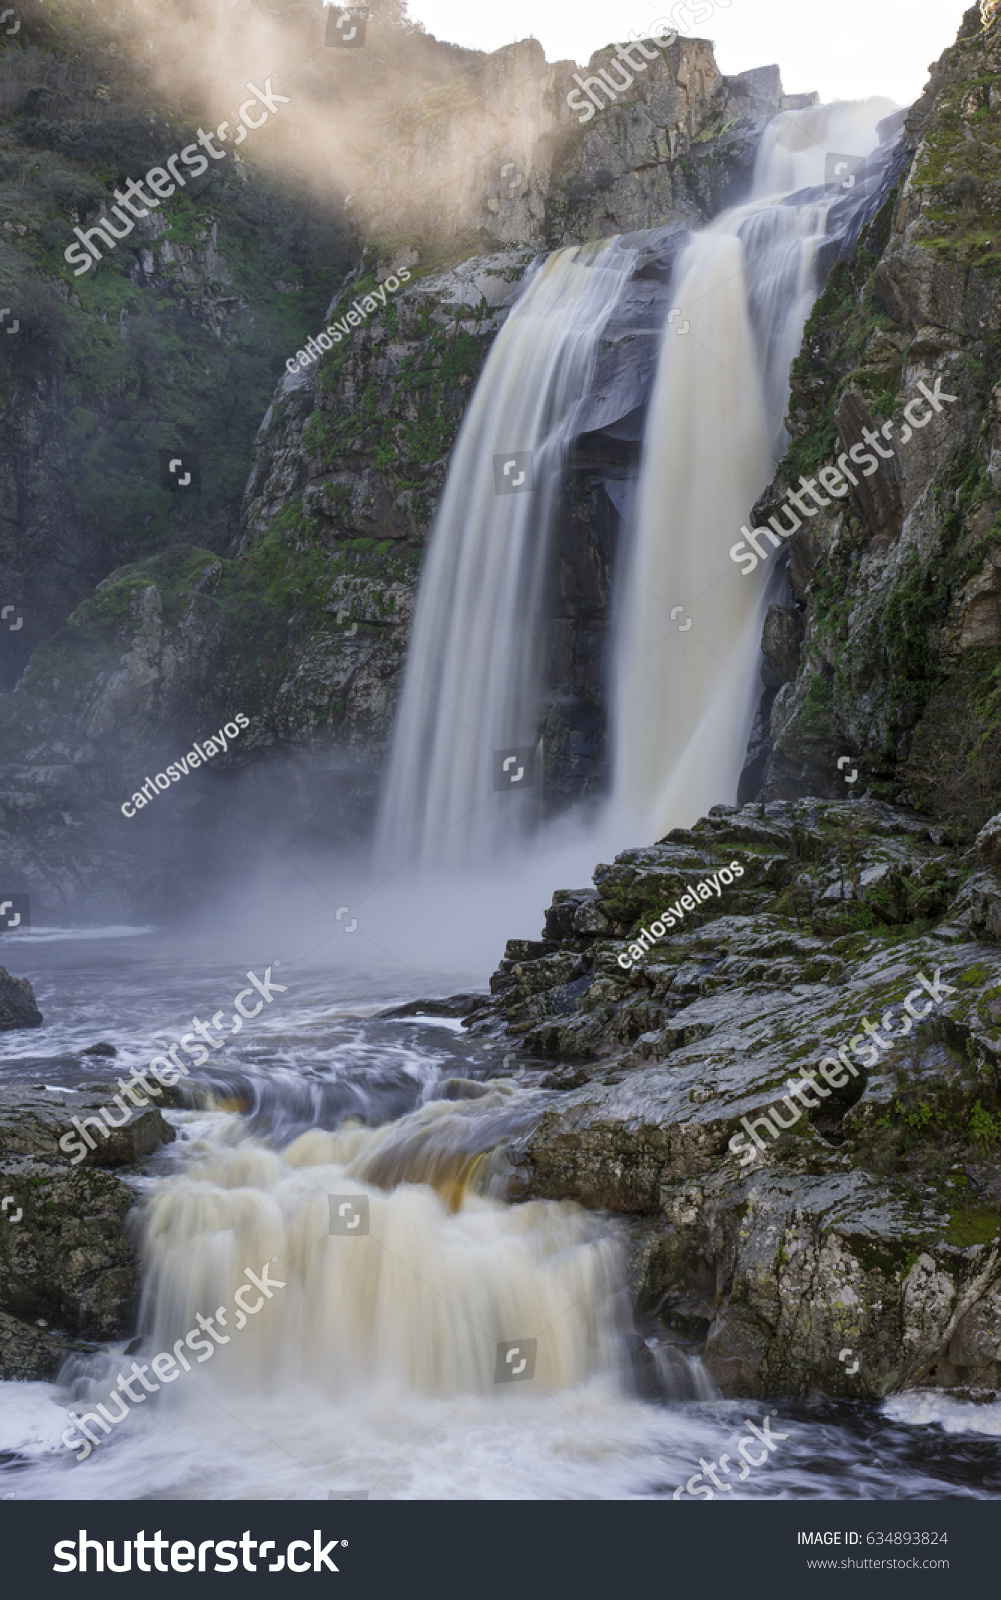 Waterfall River Uces Salamanca Spain Nature Stock Image 634893824